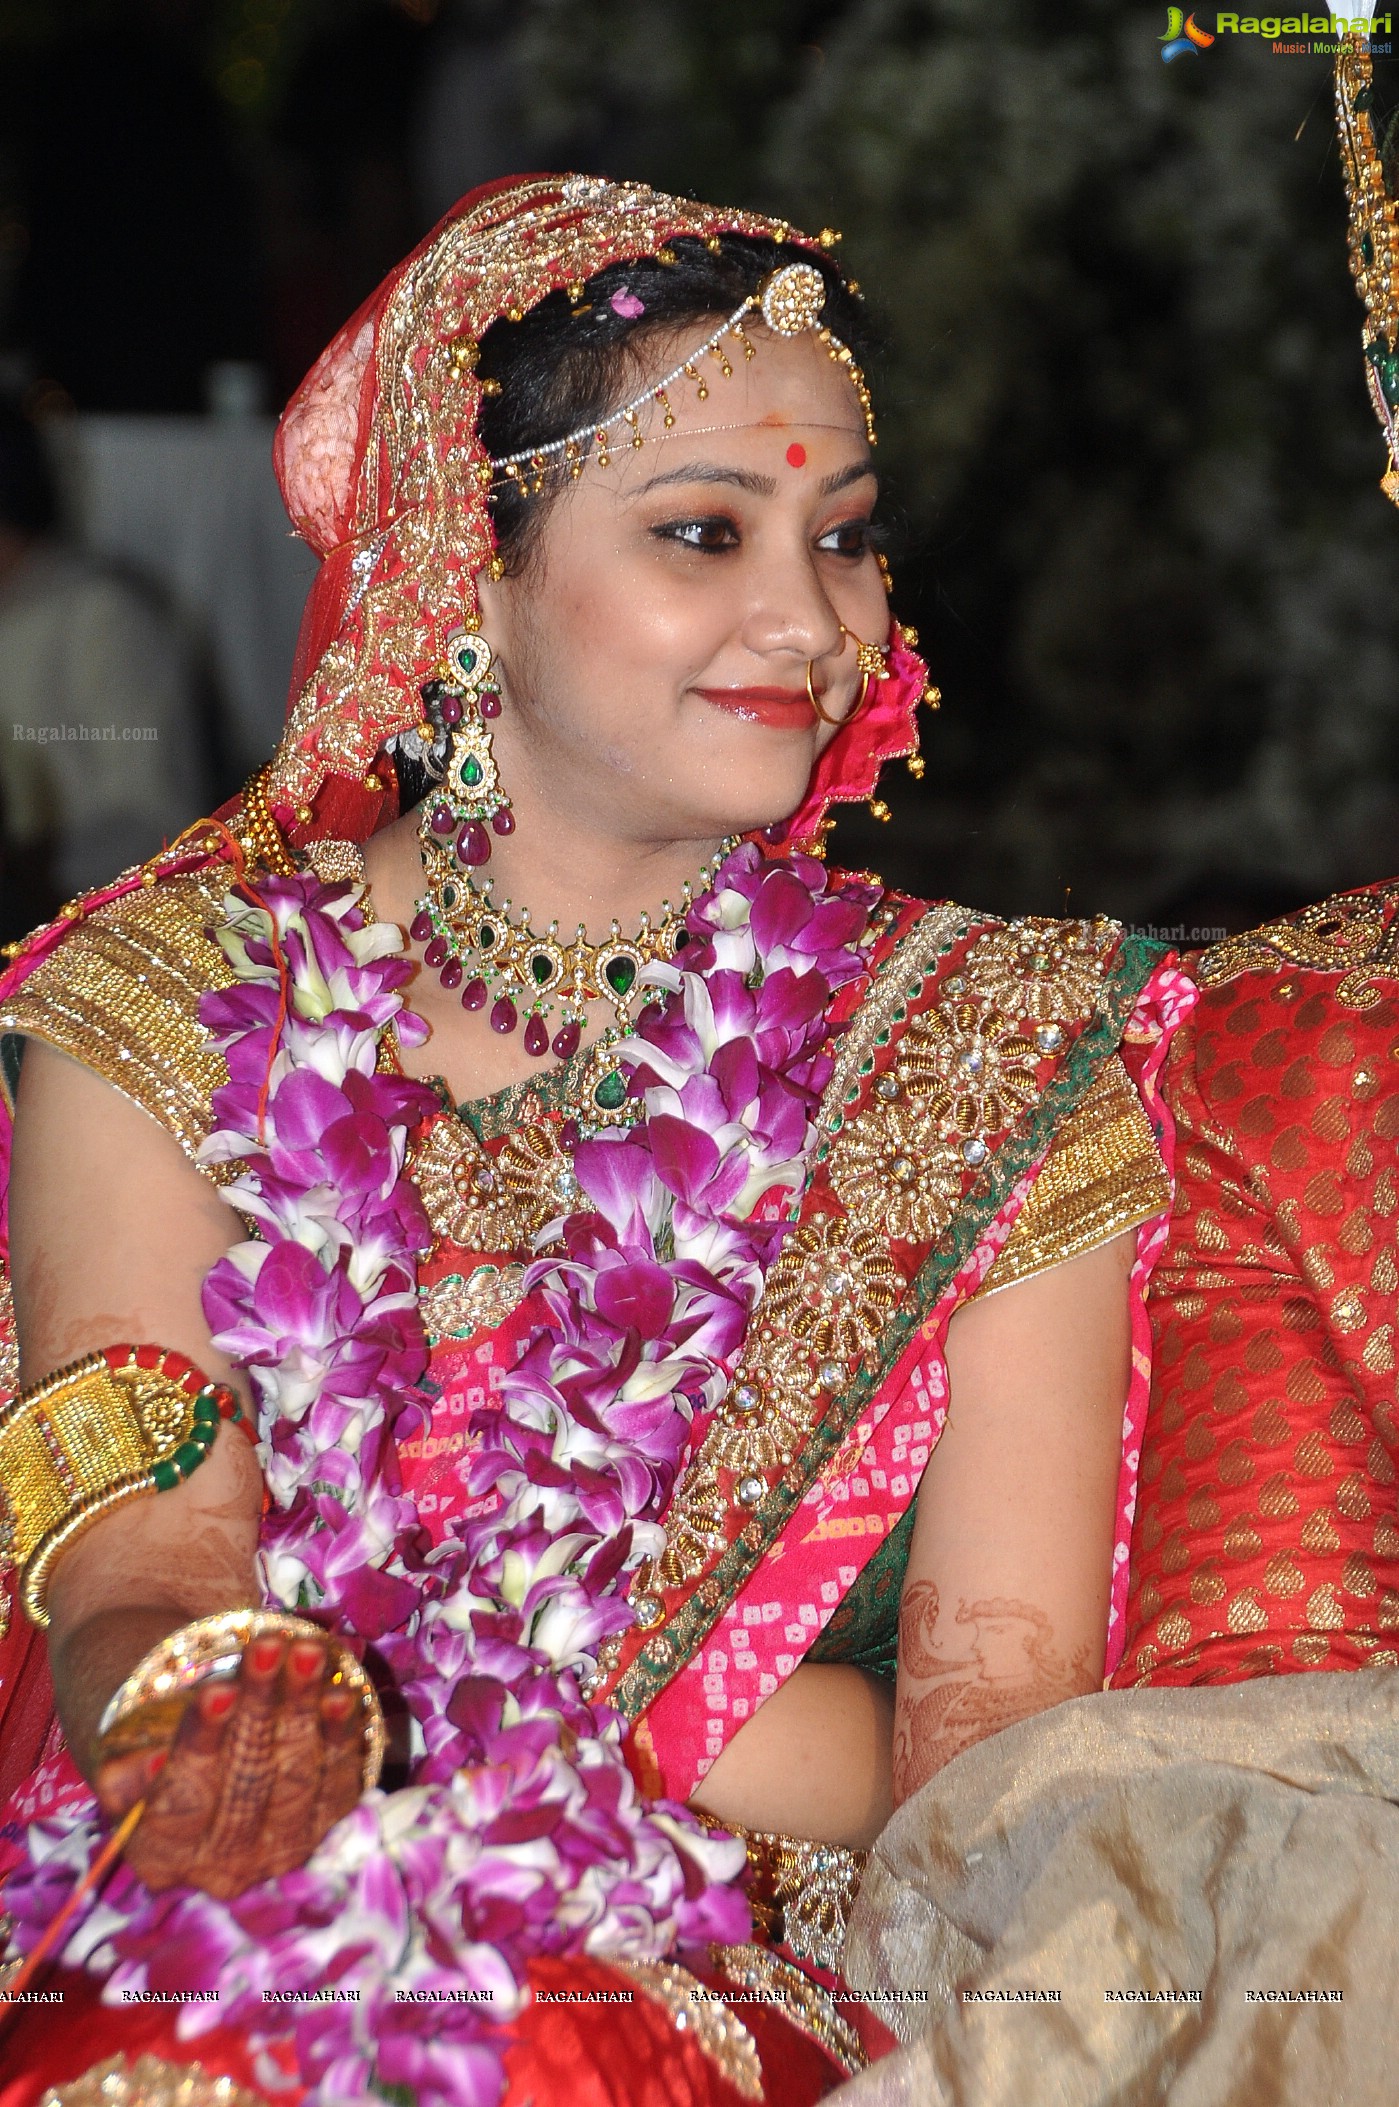 Abhiram Agarwal and Soniakshi's Wedding